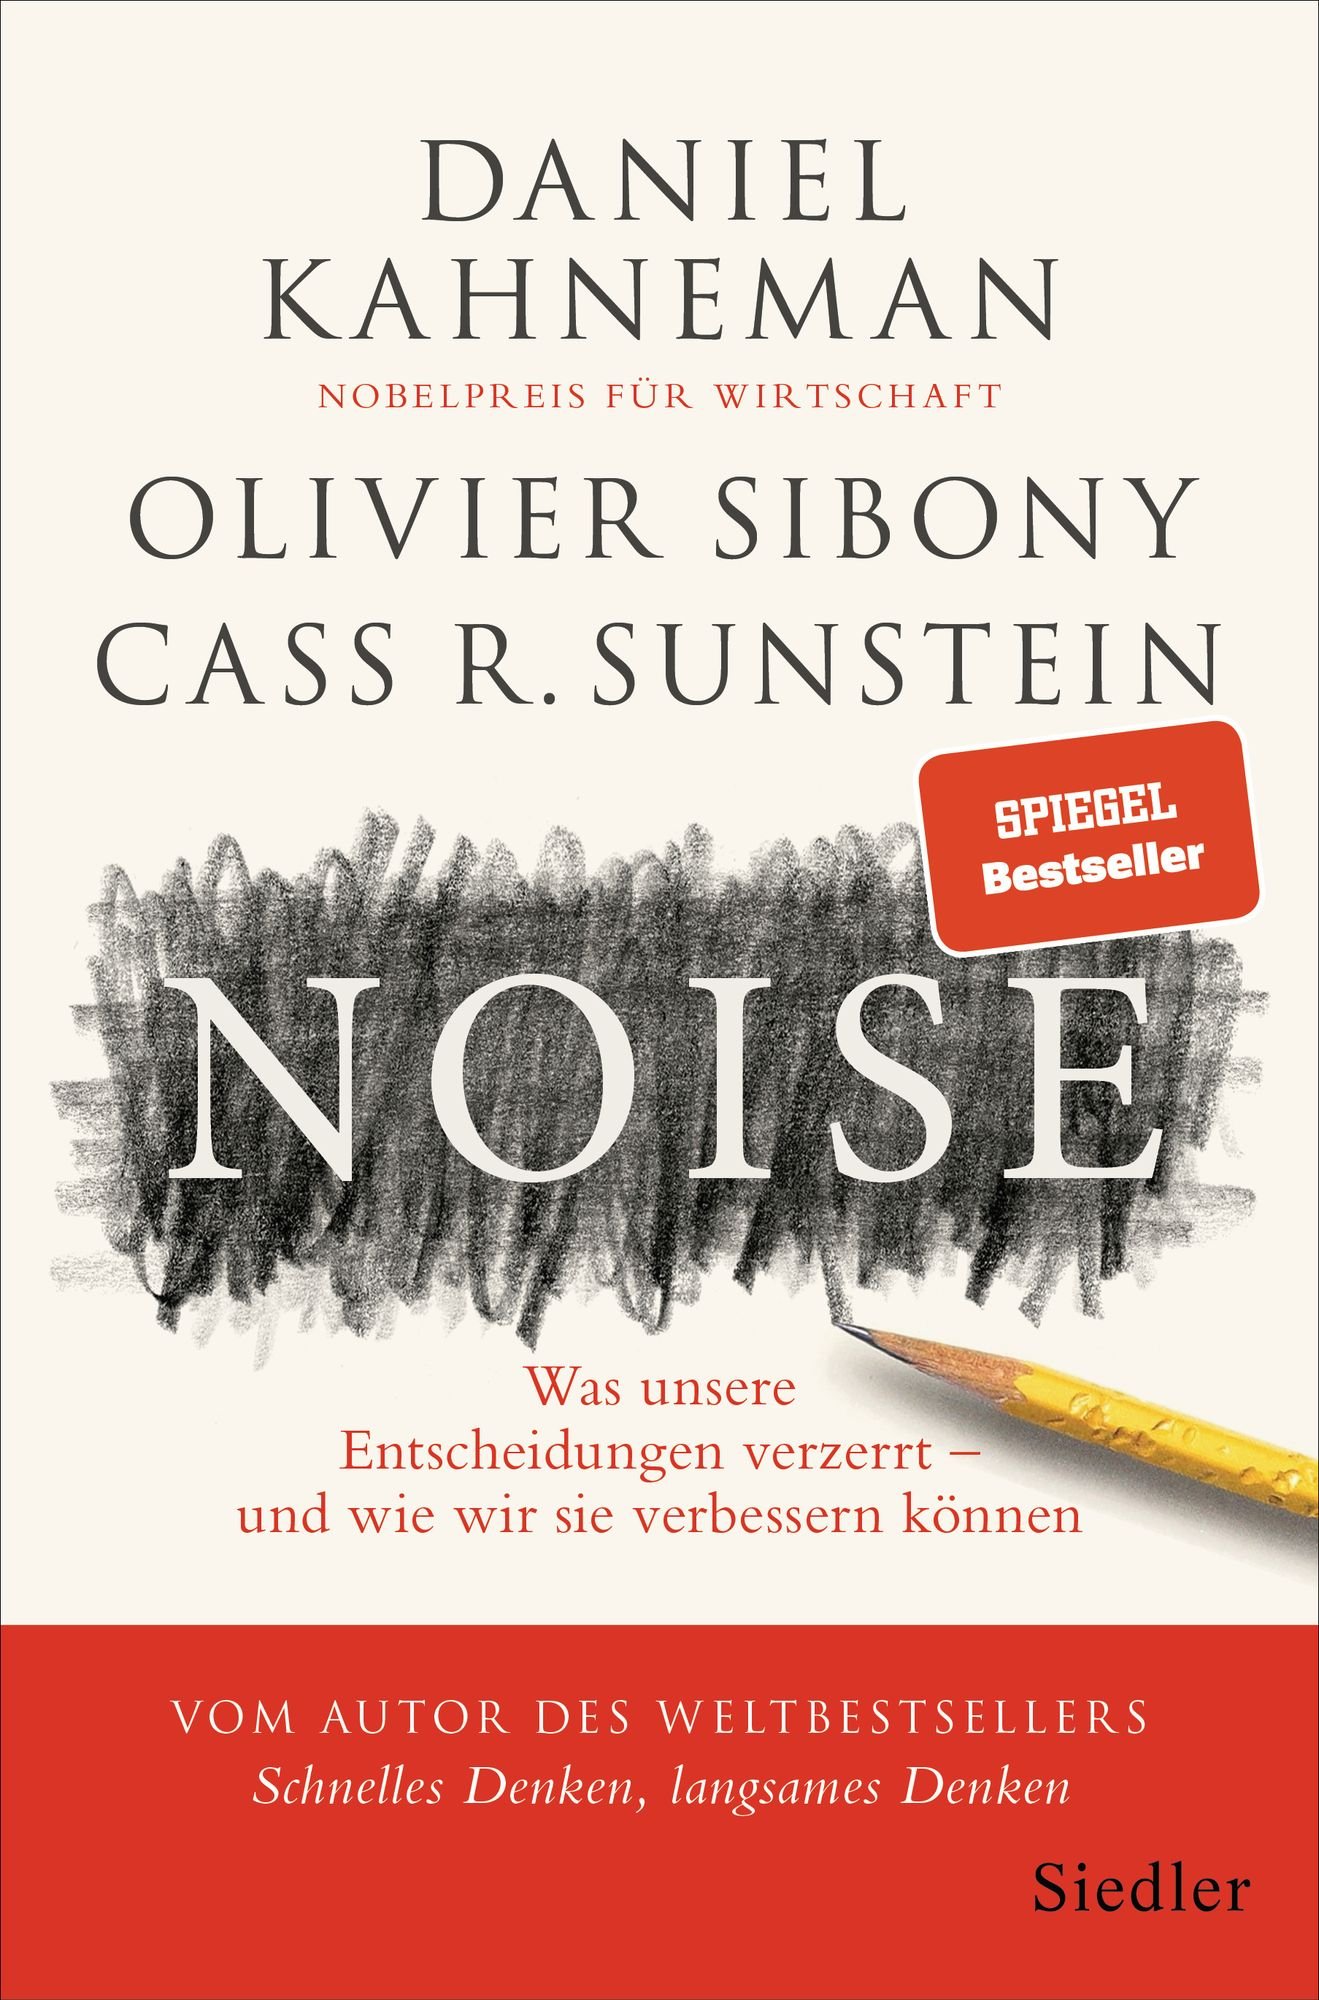 Daniel Kahneman, Olivier Sibony, Cass Sunstein: Noise (Paperback, German language, 2021, Siedler)